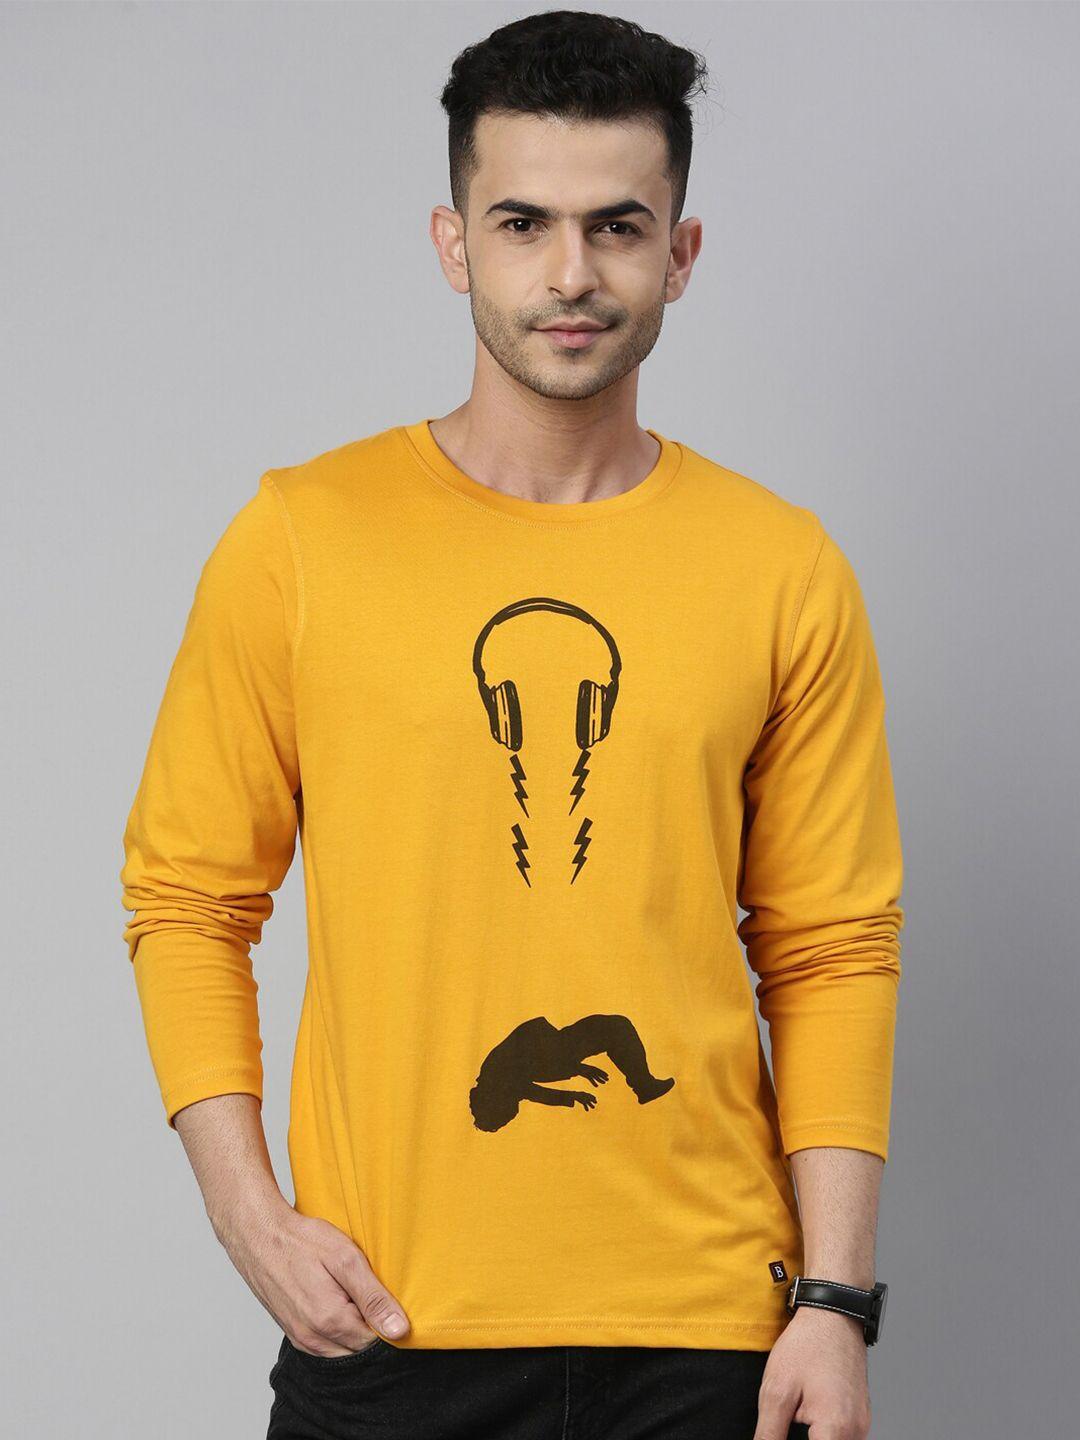 bushirt men mustard yellow head phone printed t-shirt